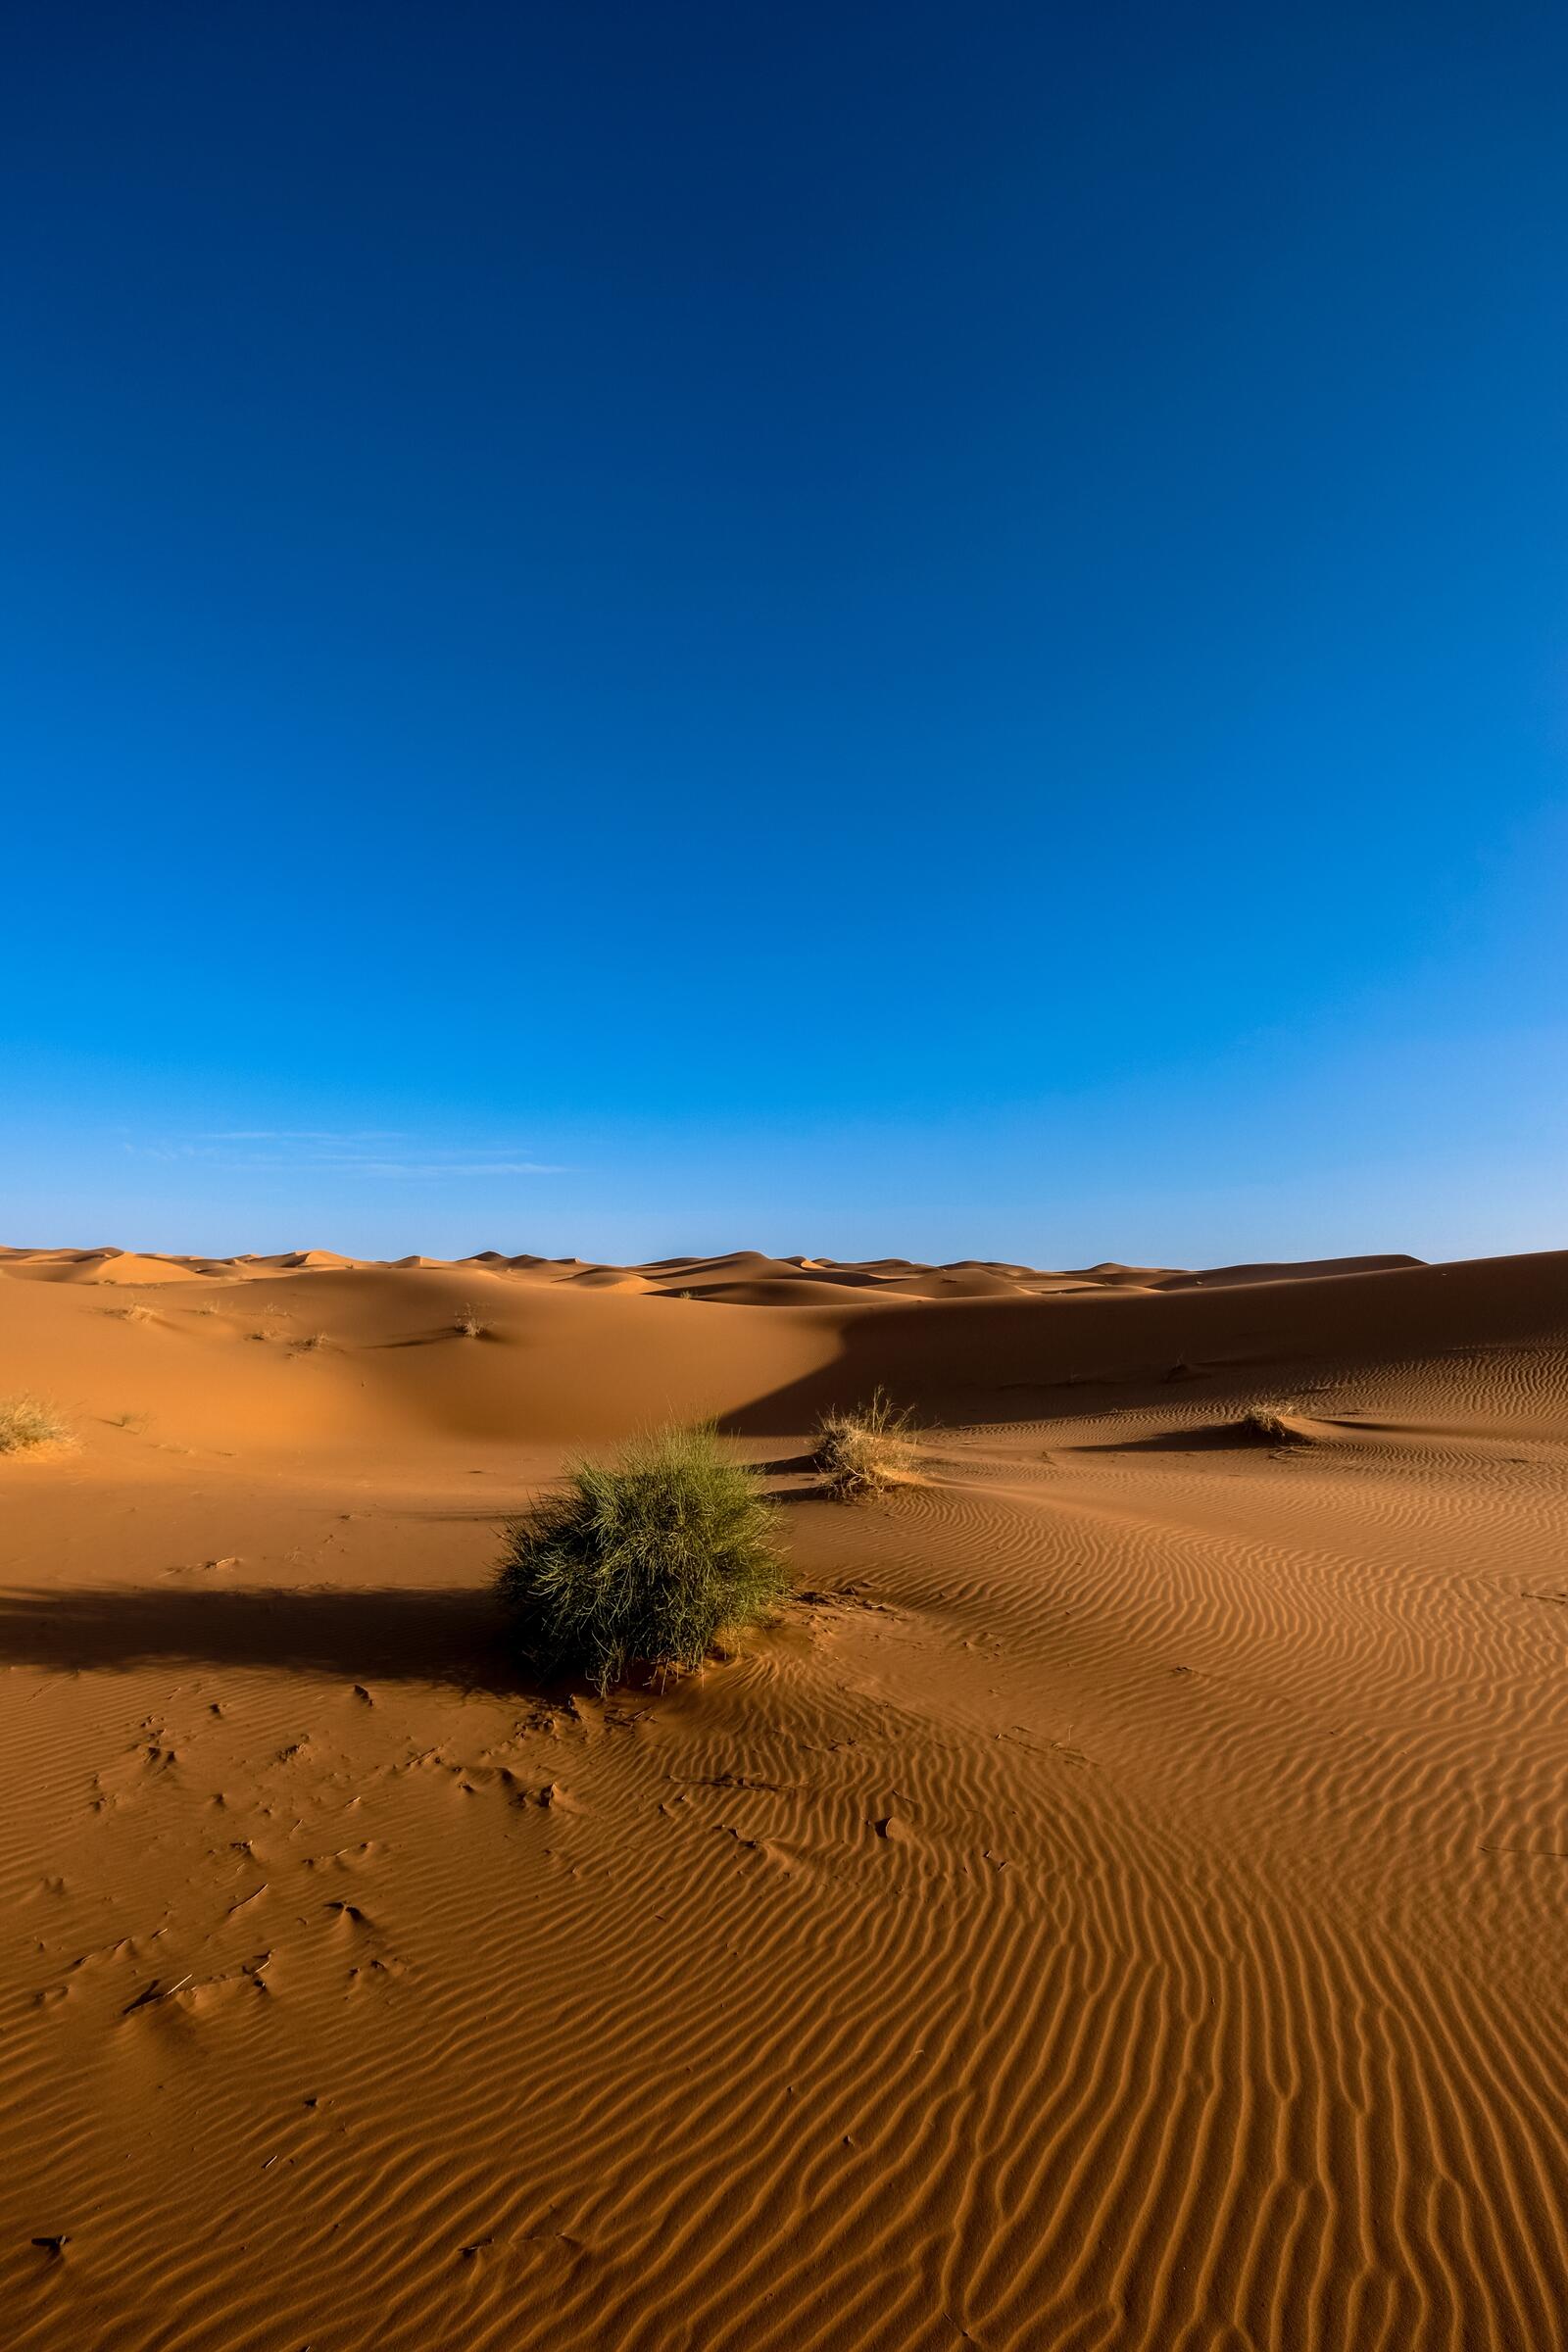 Wallpapers clear skies sand sahara desert on the desktop